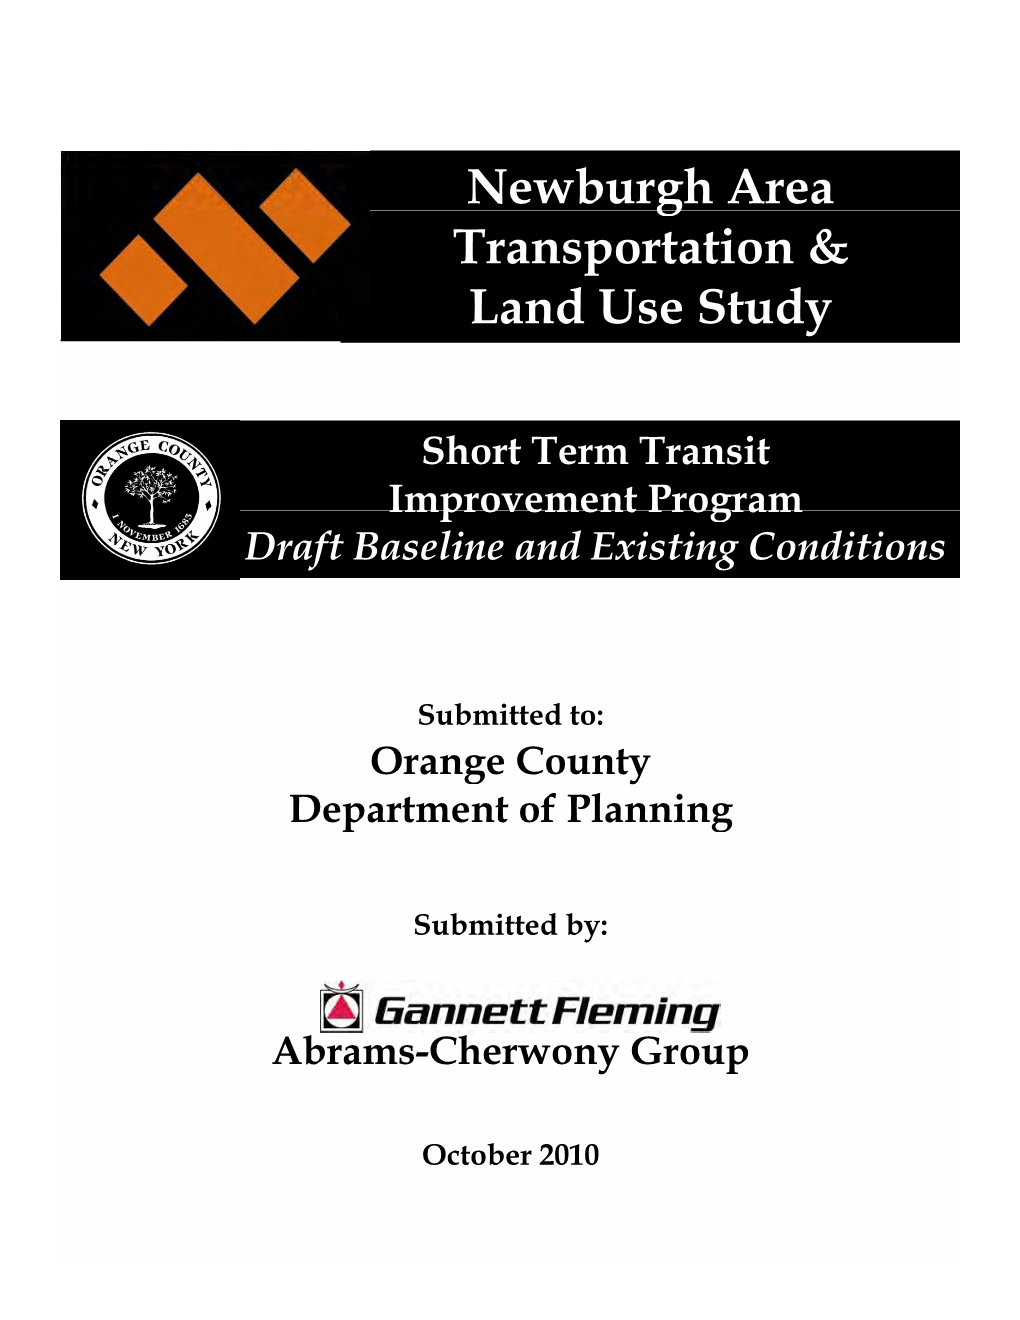 Newburgh Area Transportation & Land Use Study